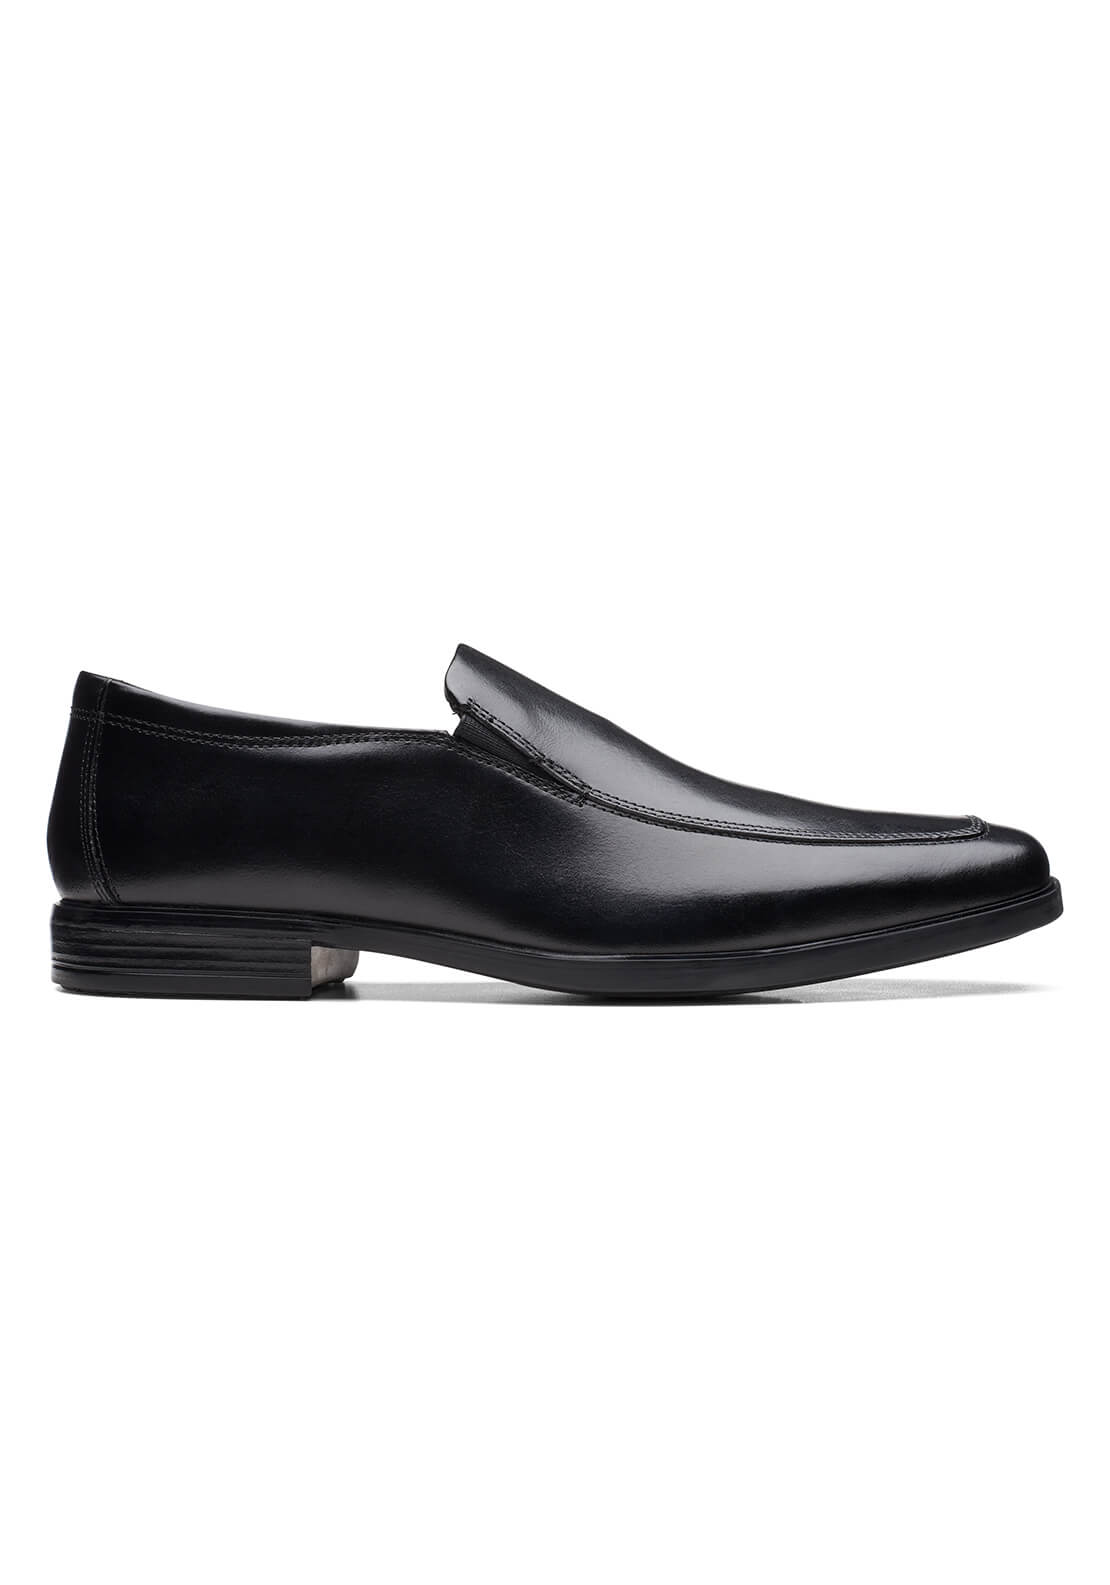 Clarks Howard Edge Formal Shoe - Black 4 Shaws Department Stores